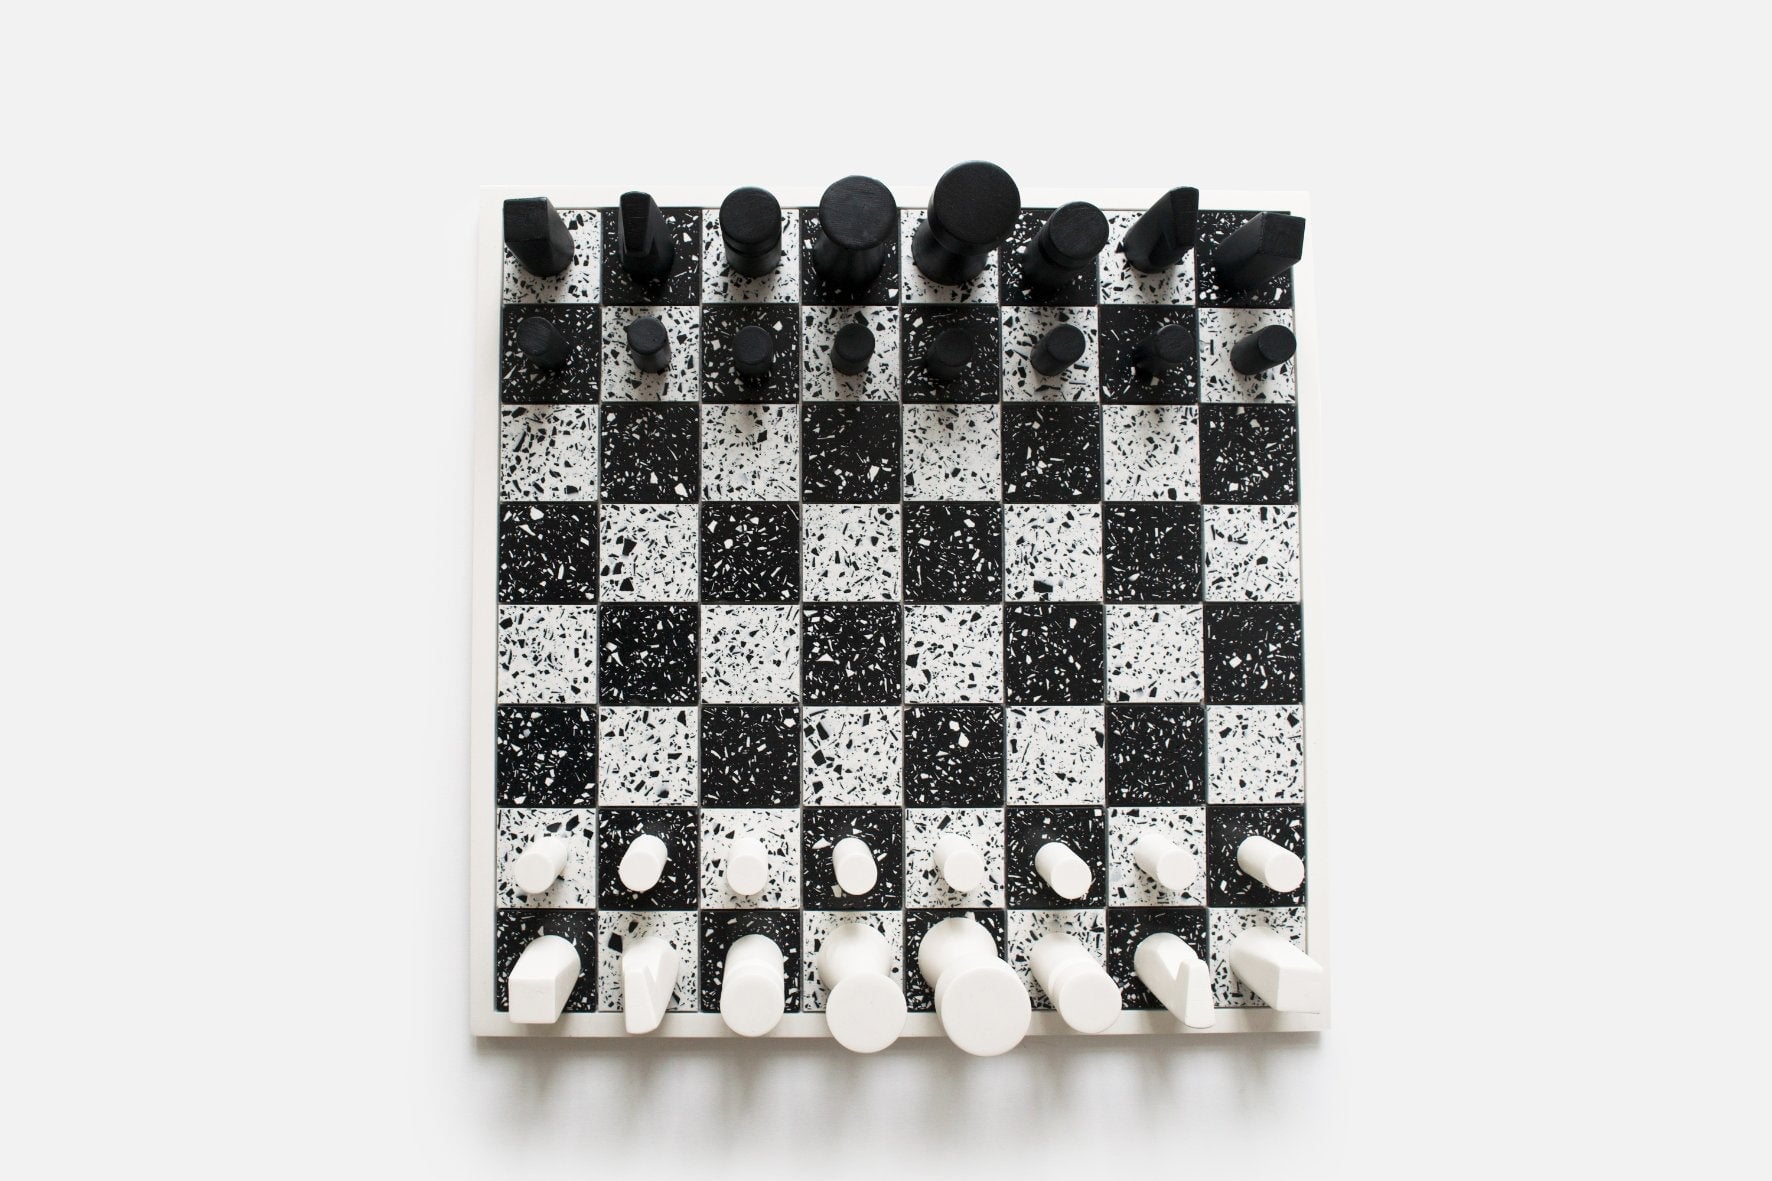 Chess Board - Terrazzo White & Black Board Games House Raccoon 